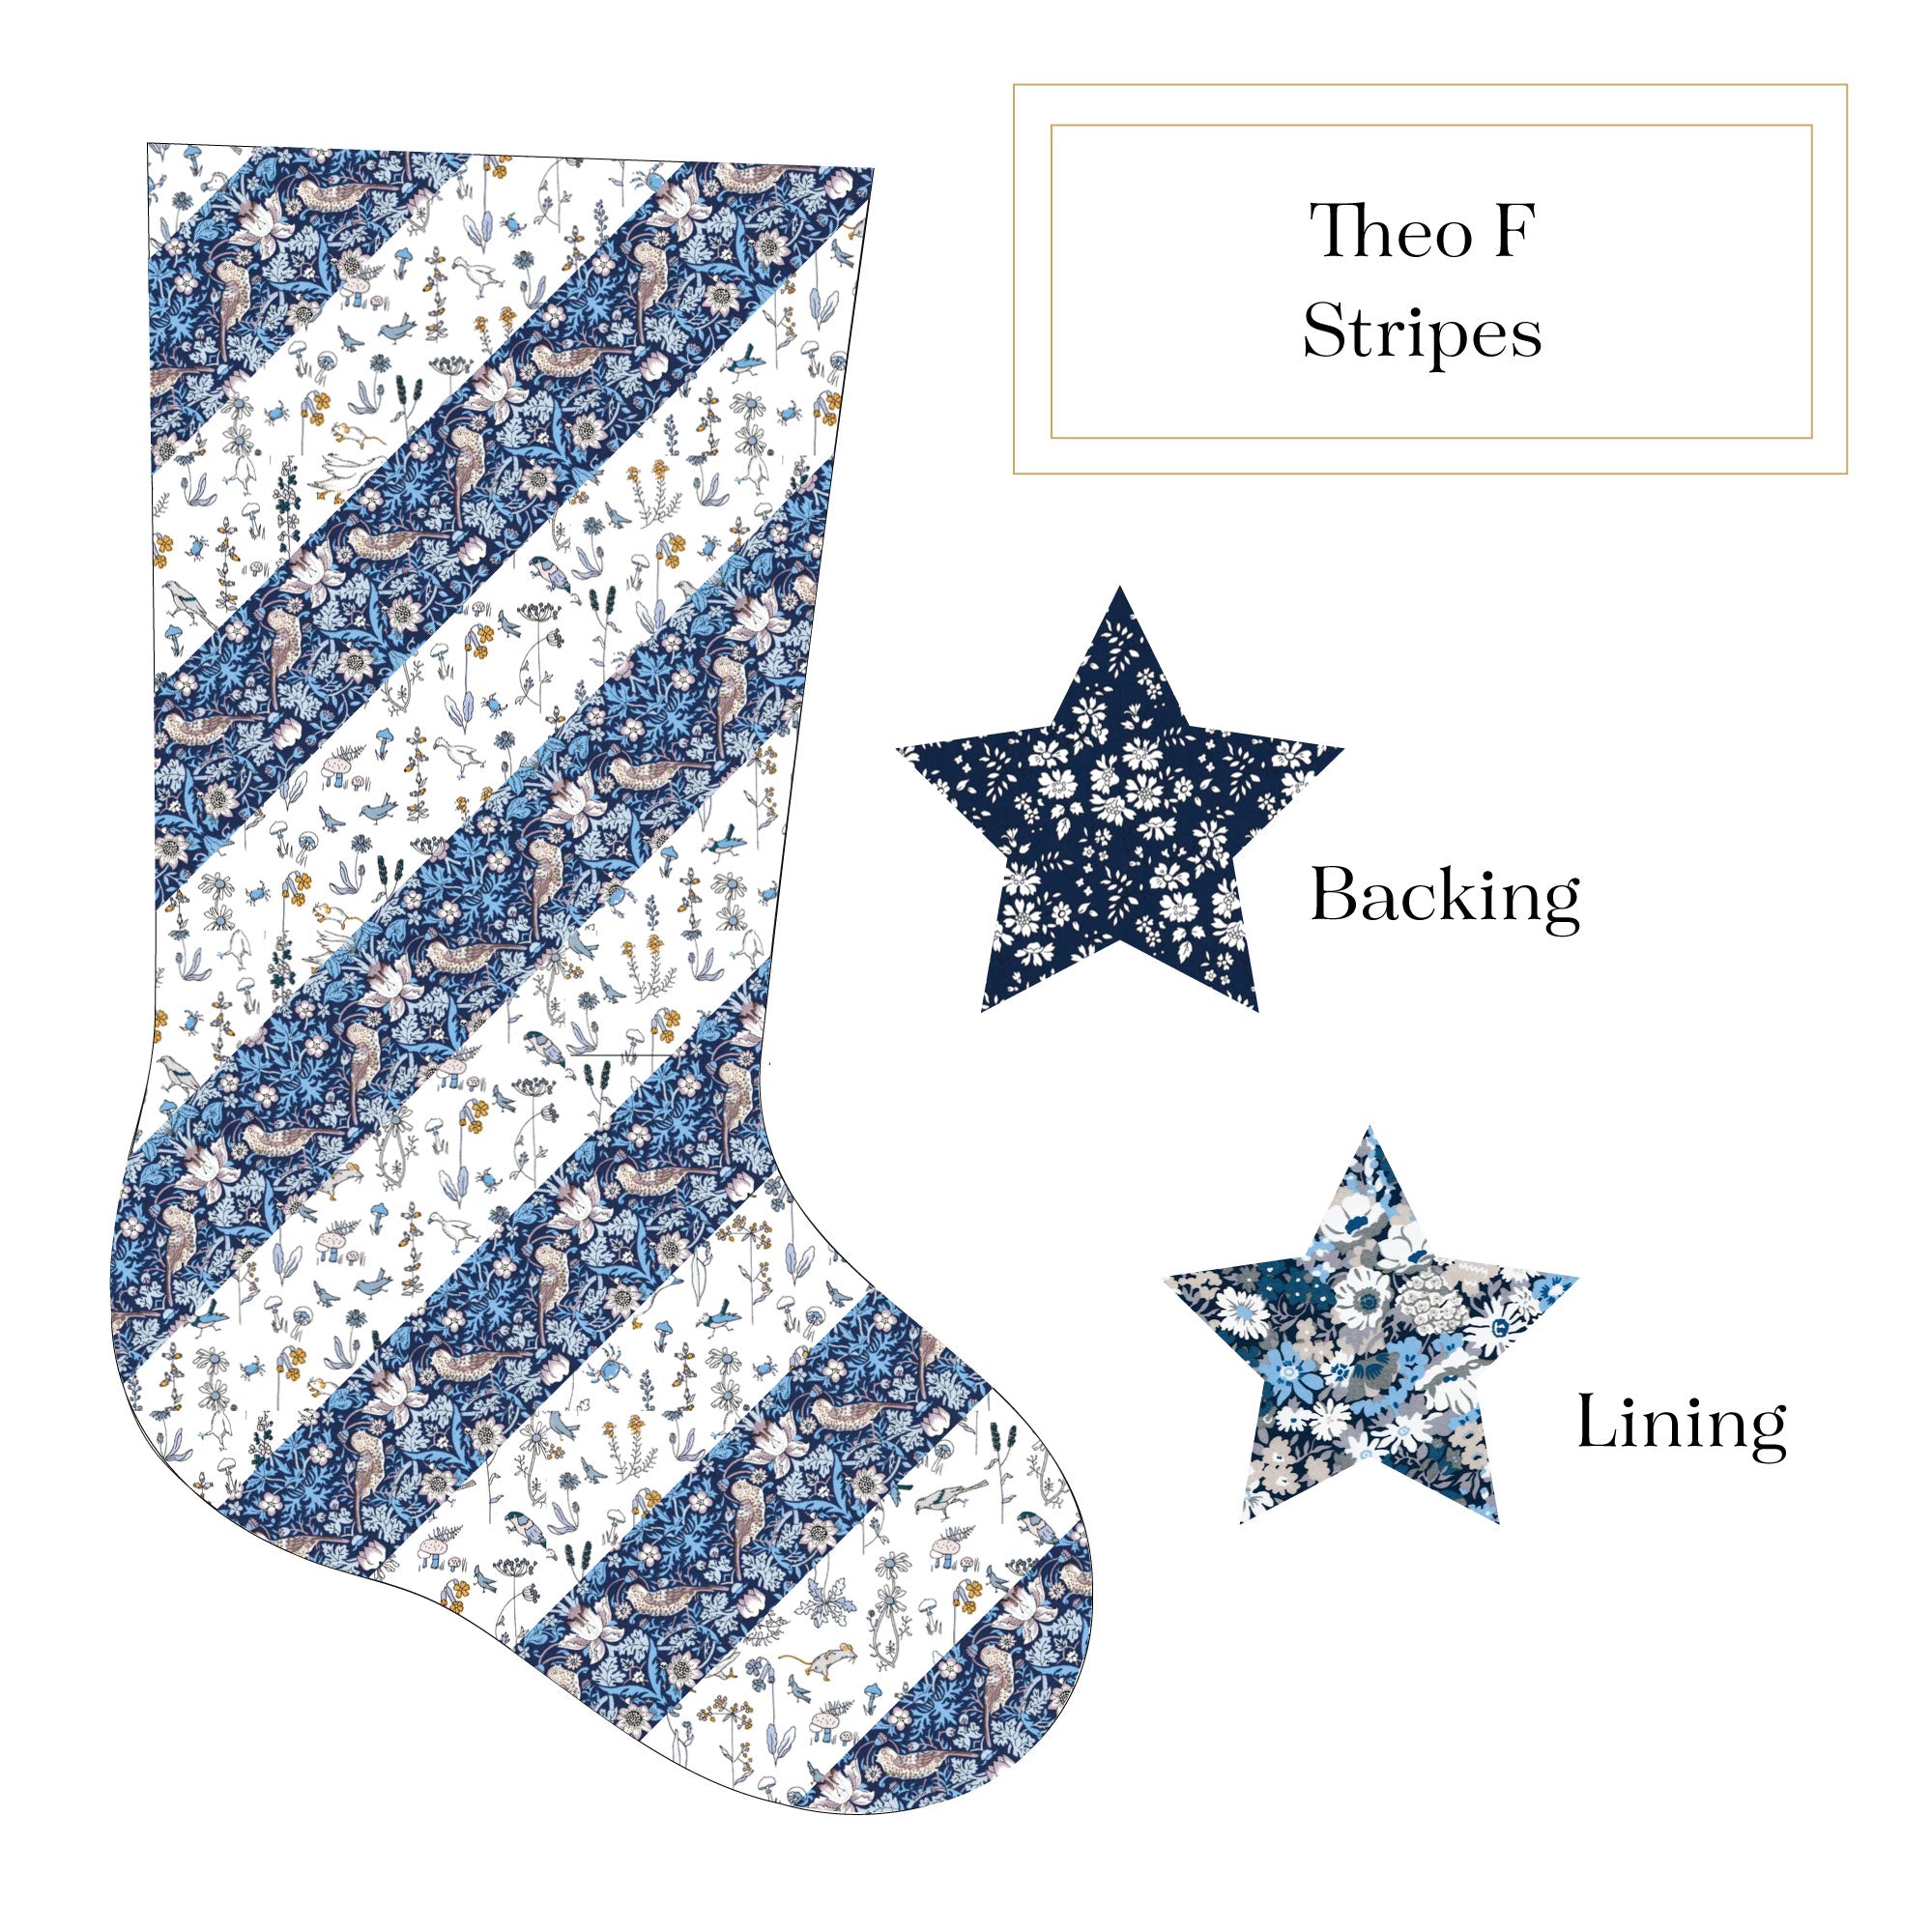 Light Blue and White Santa Skiing Needlepoint Stocking – Lillian Grey